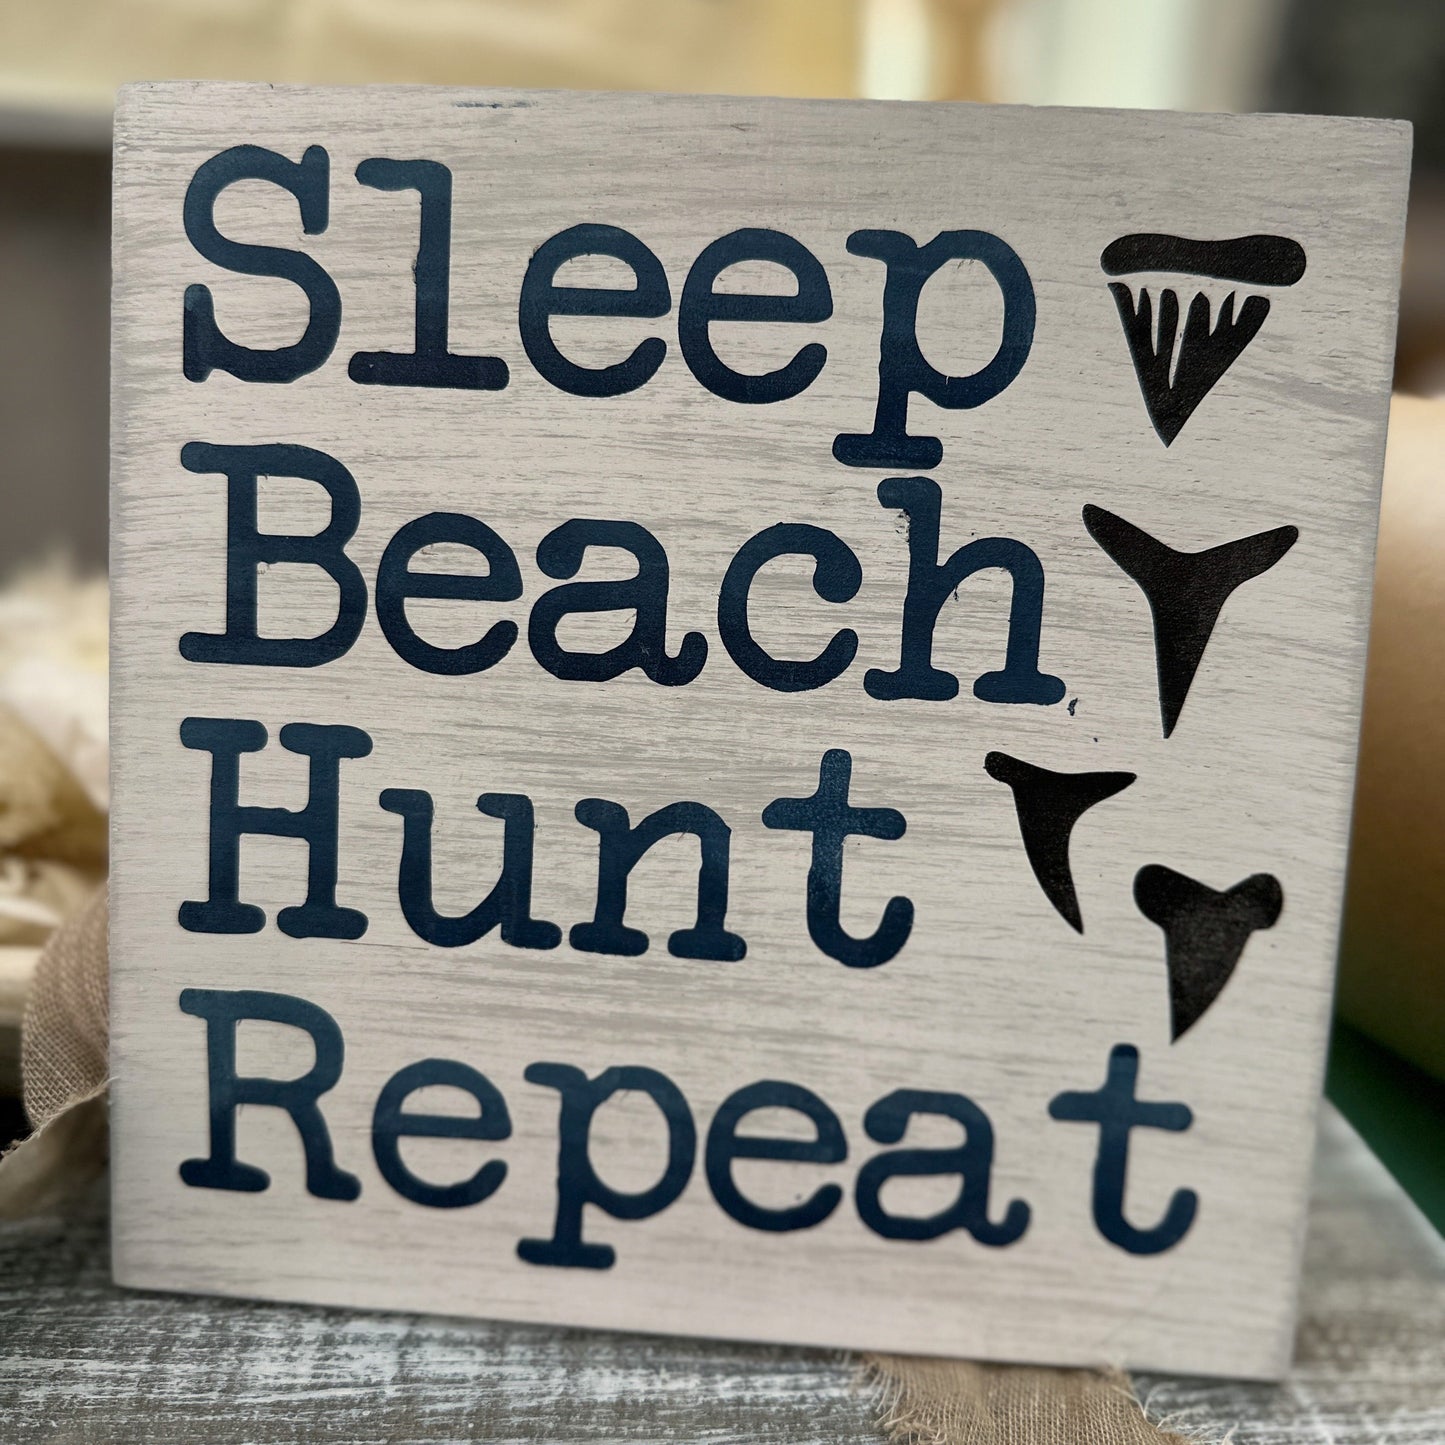 PAINTED* Sleep Beach Hunt Repeat P2595 MINI DESIGN